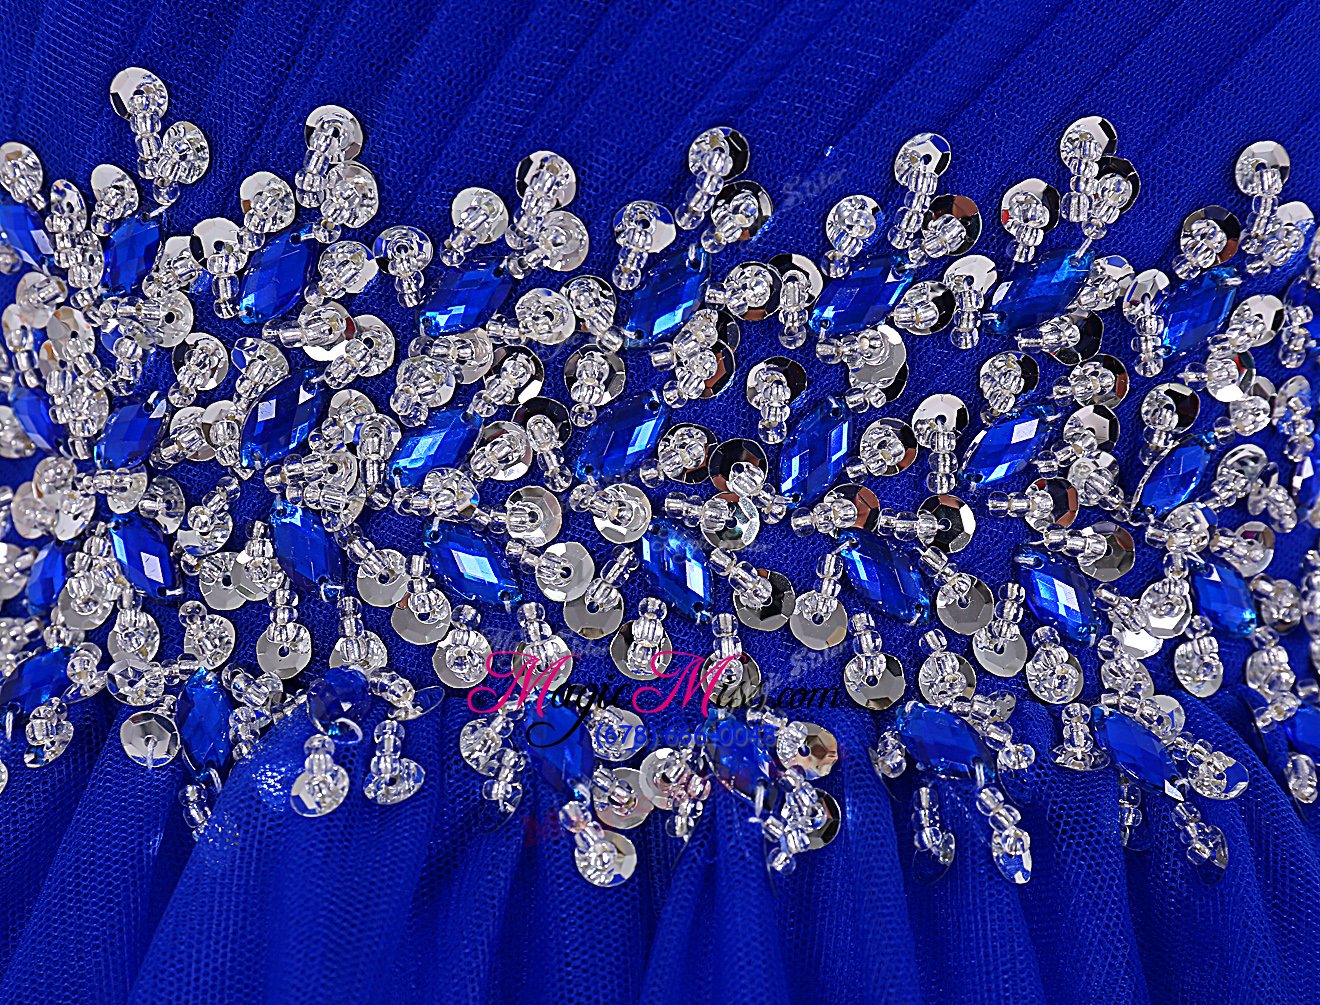 wholesale ideal royal blue sleeveless mini length beading lace up dress for prom